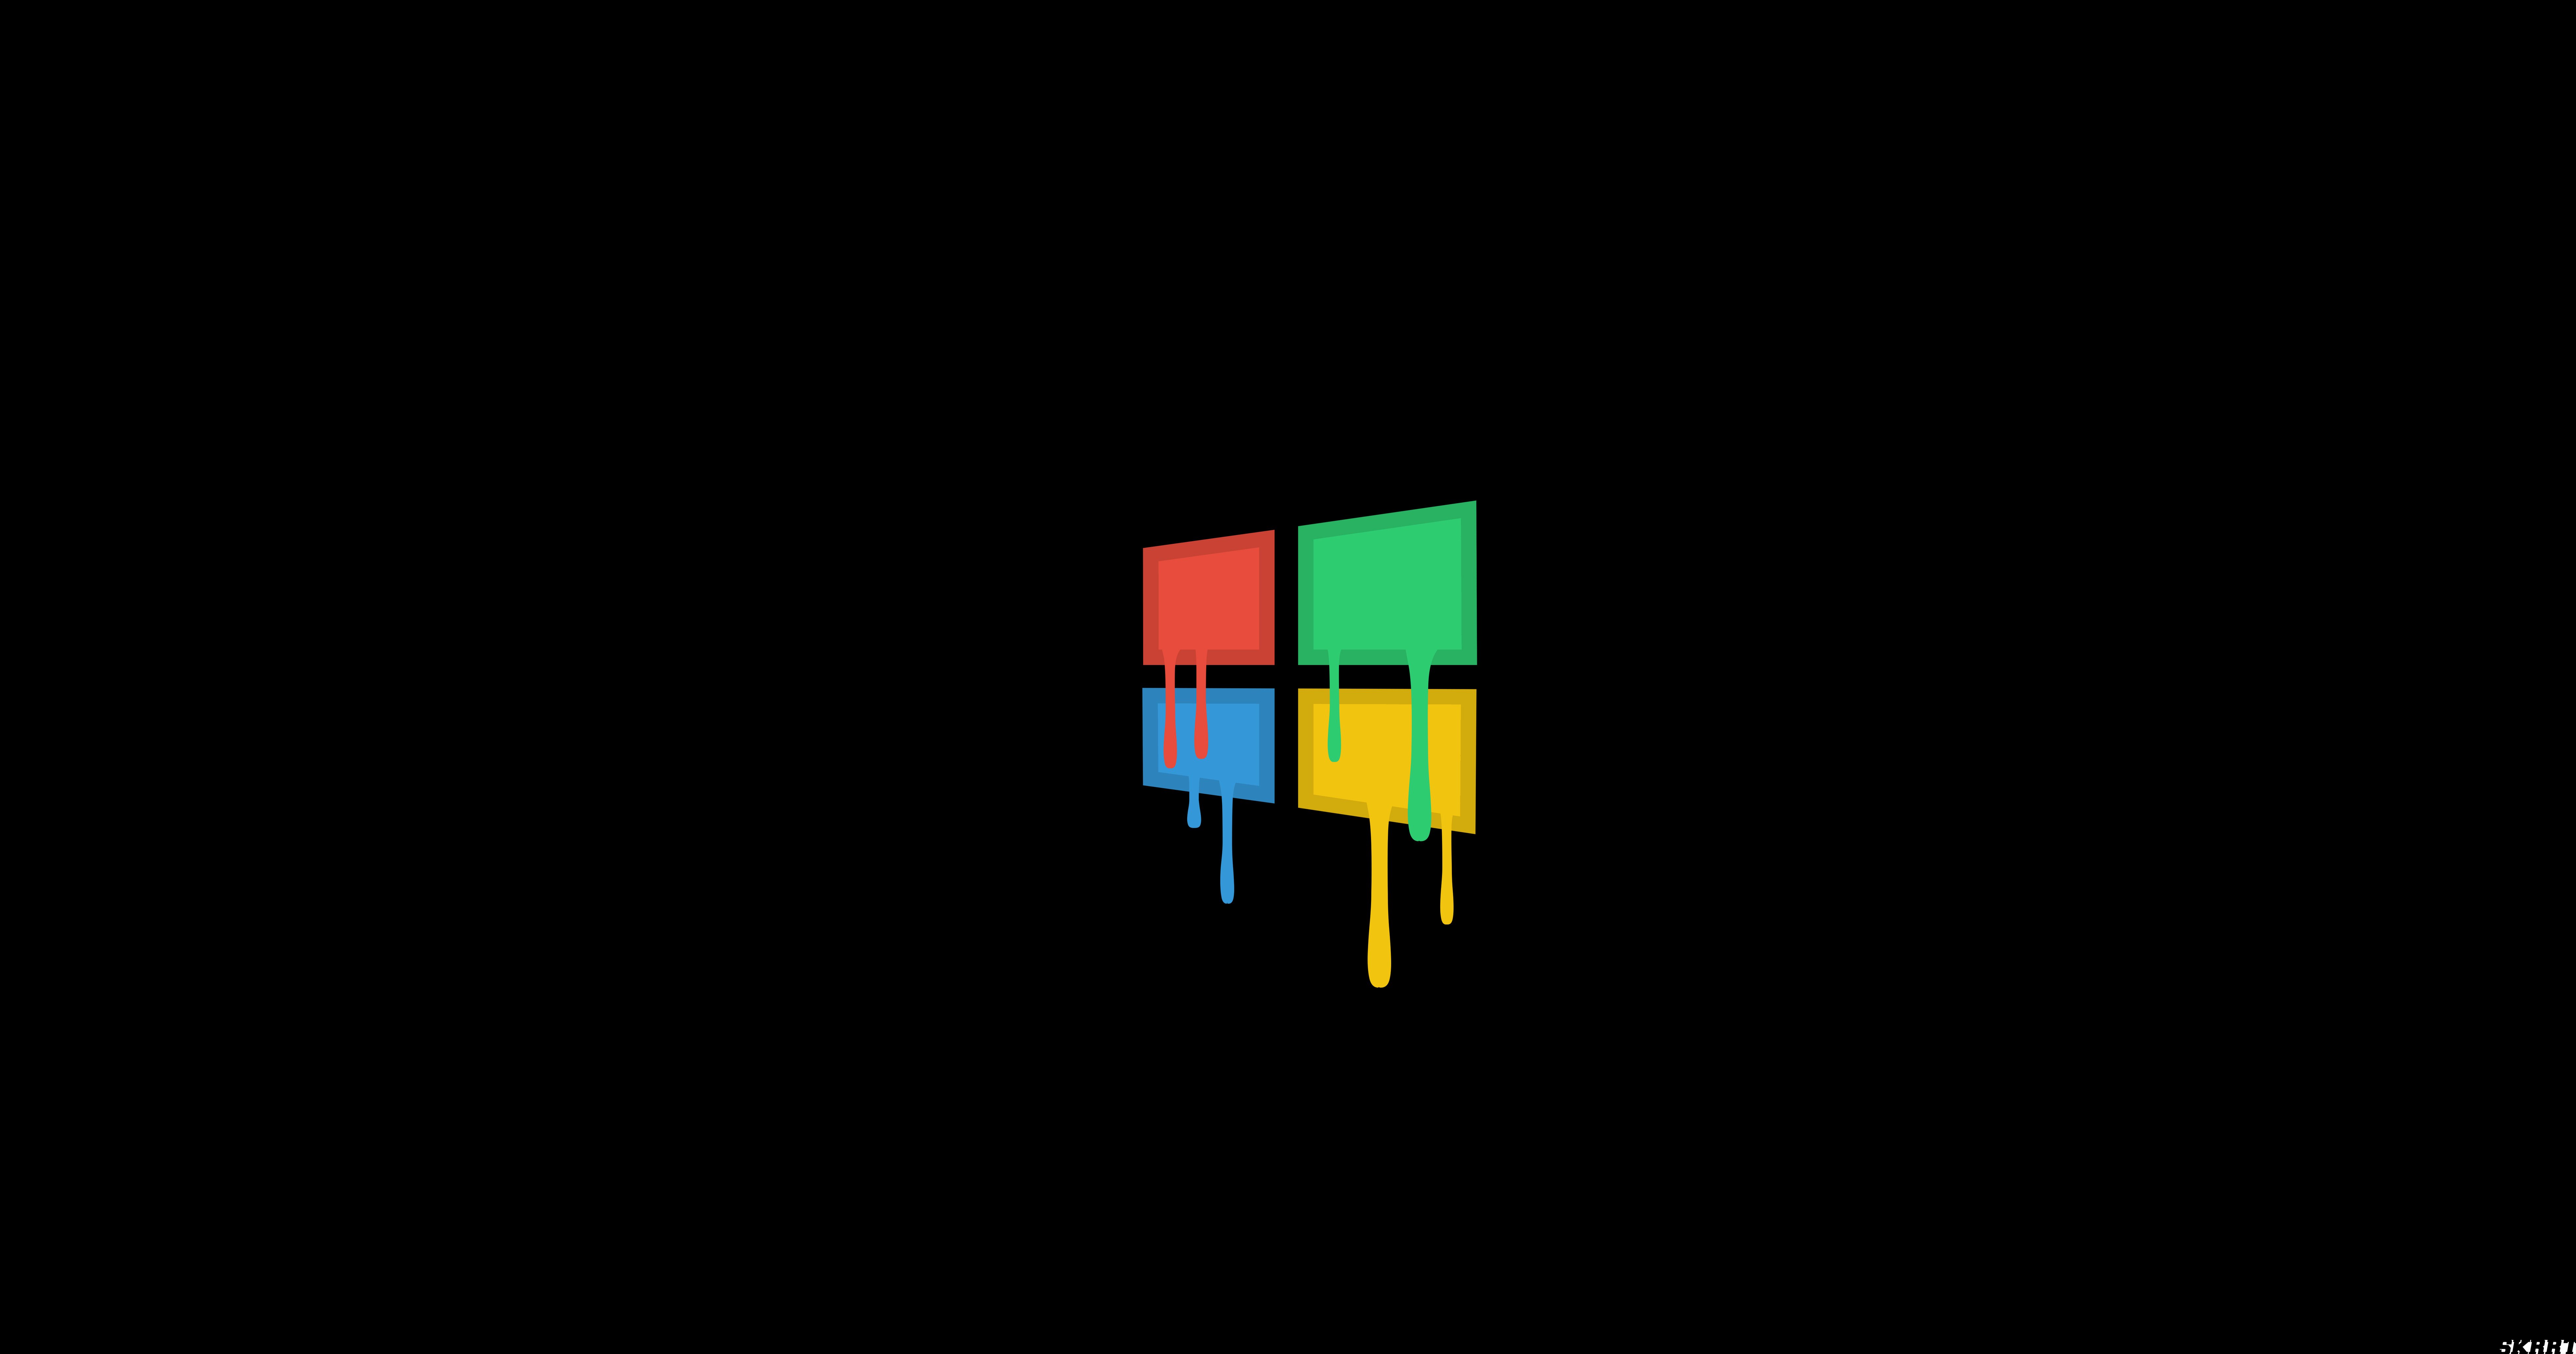 General 7842x4123 windows logo simple background black background minimalism digital art Microsoft Windows dripping paint logo